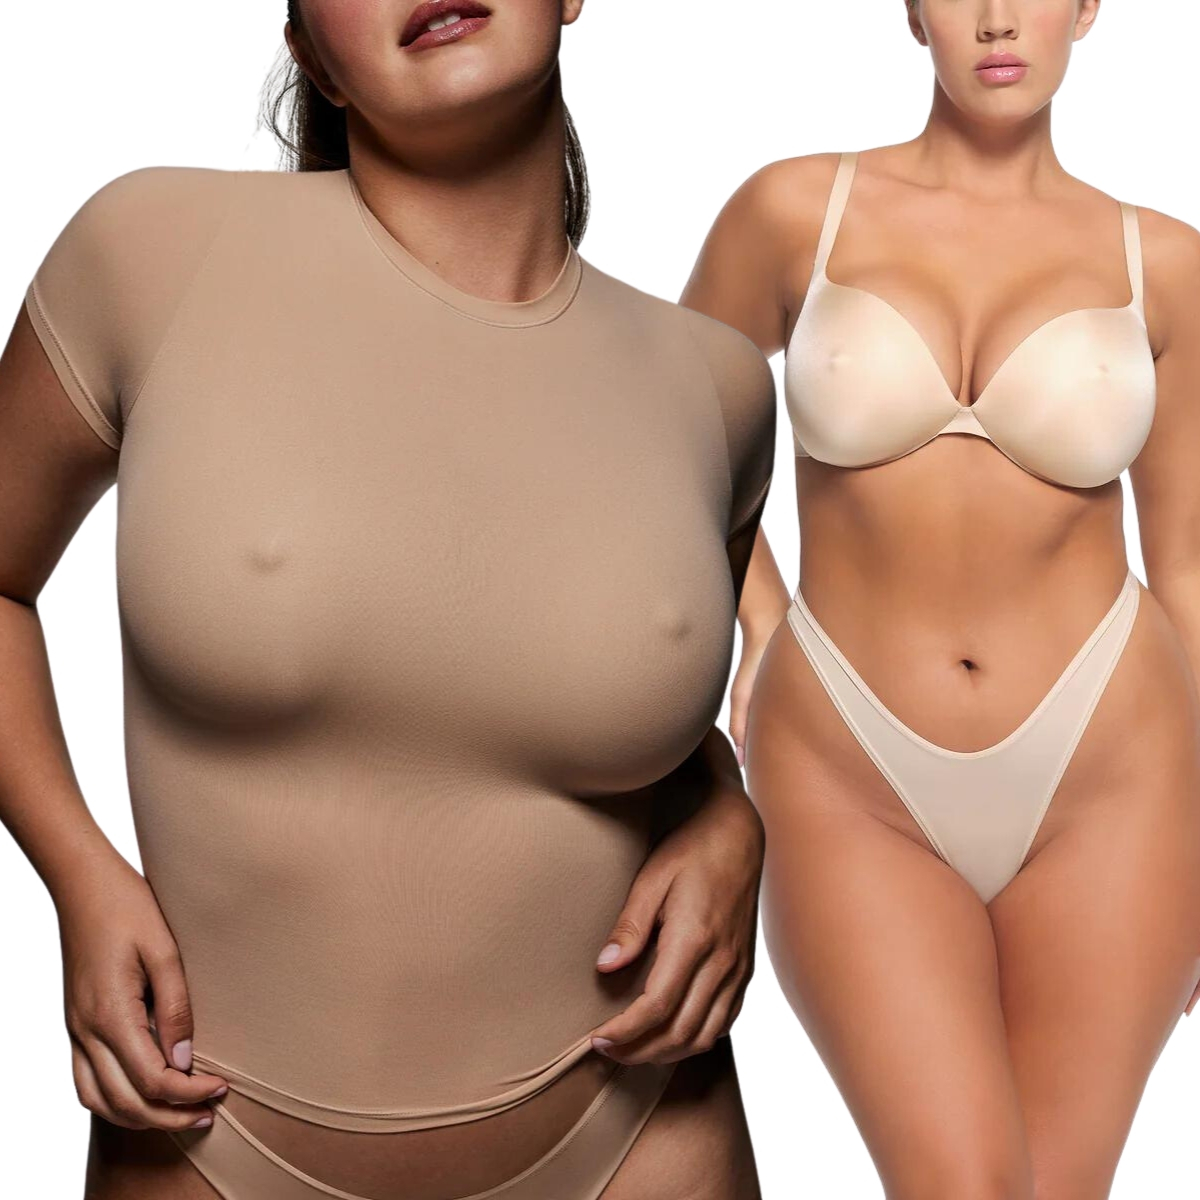 Kim Kardashian's Skims nipple bra is getting backlash, but breast